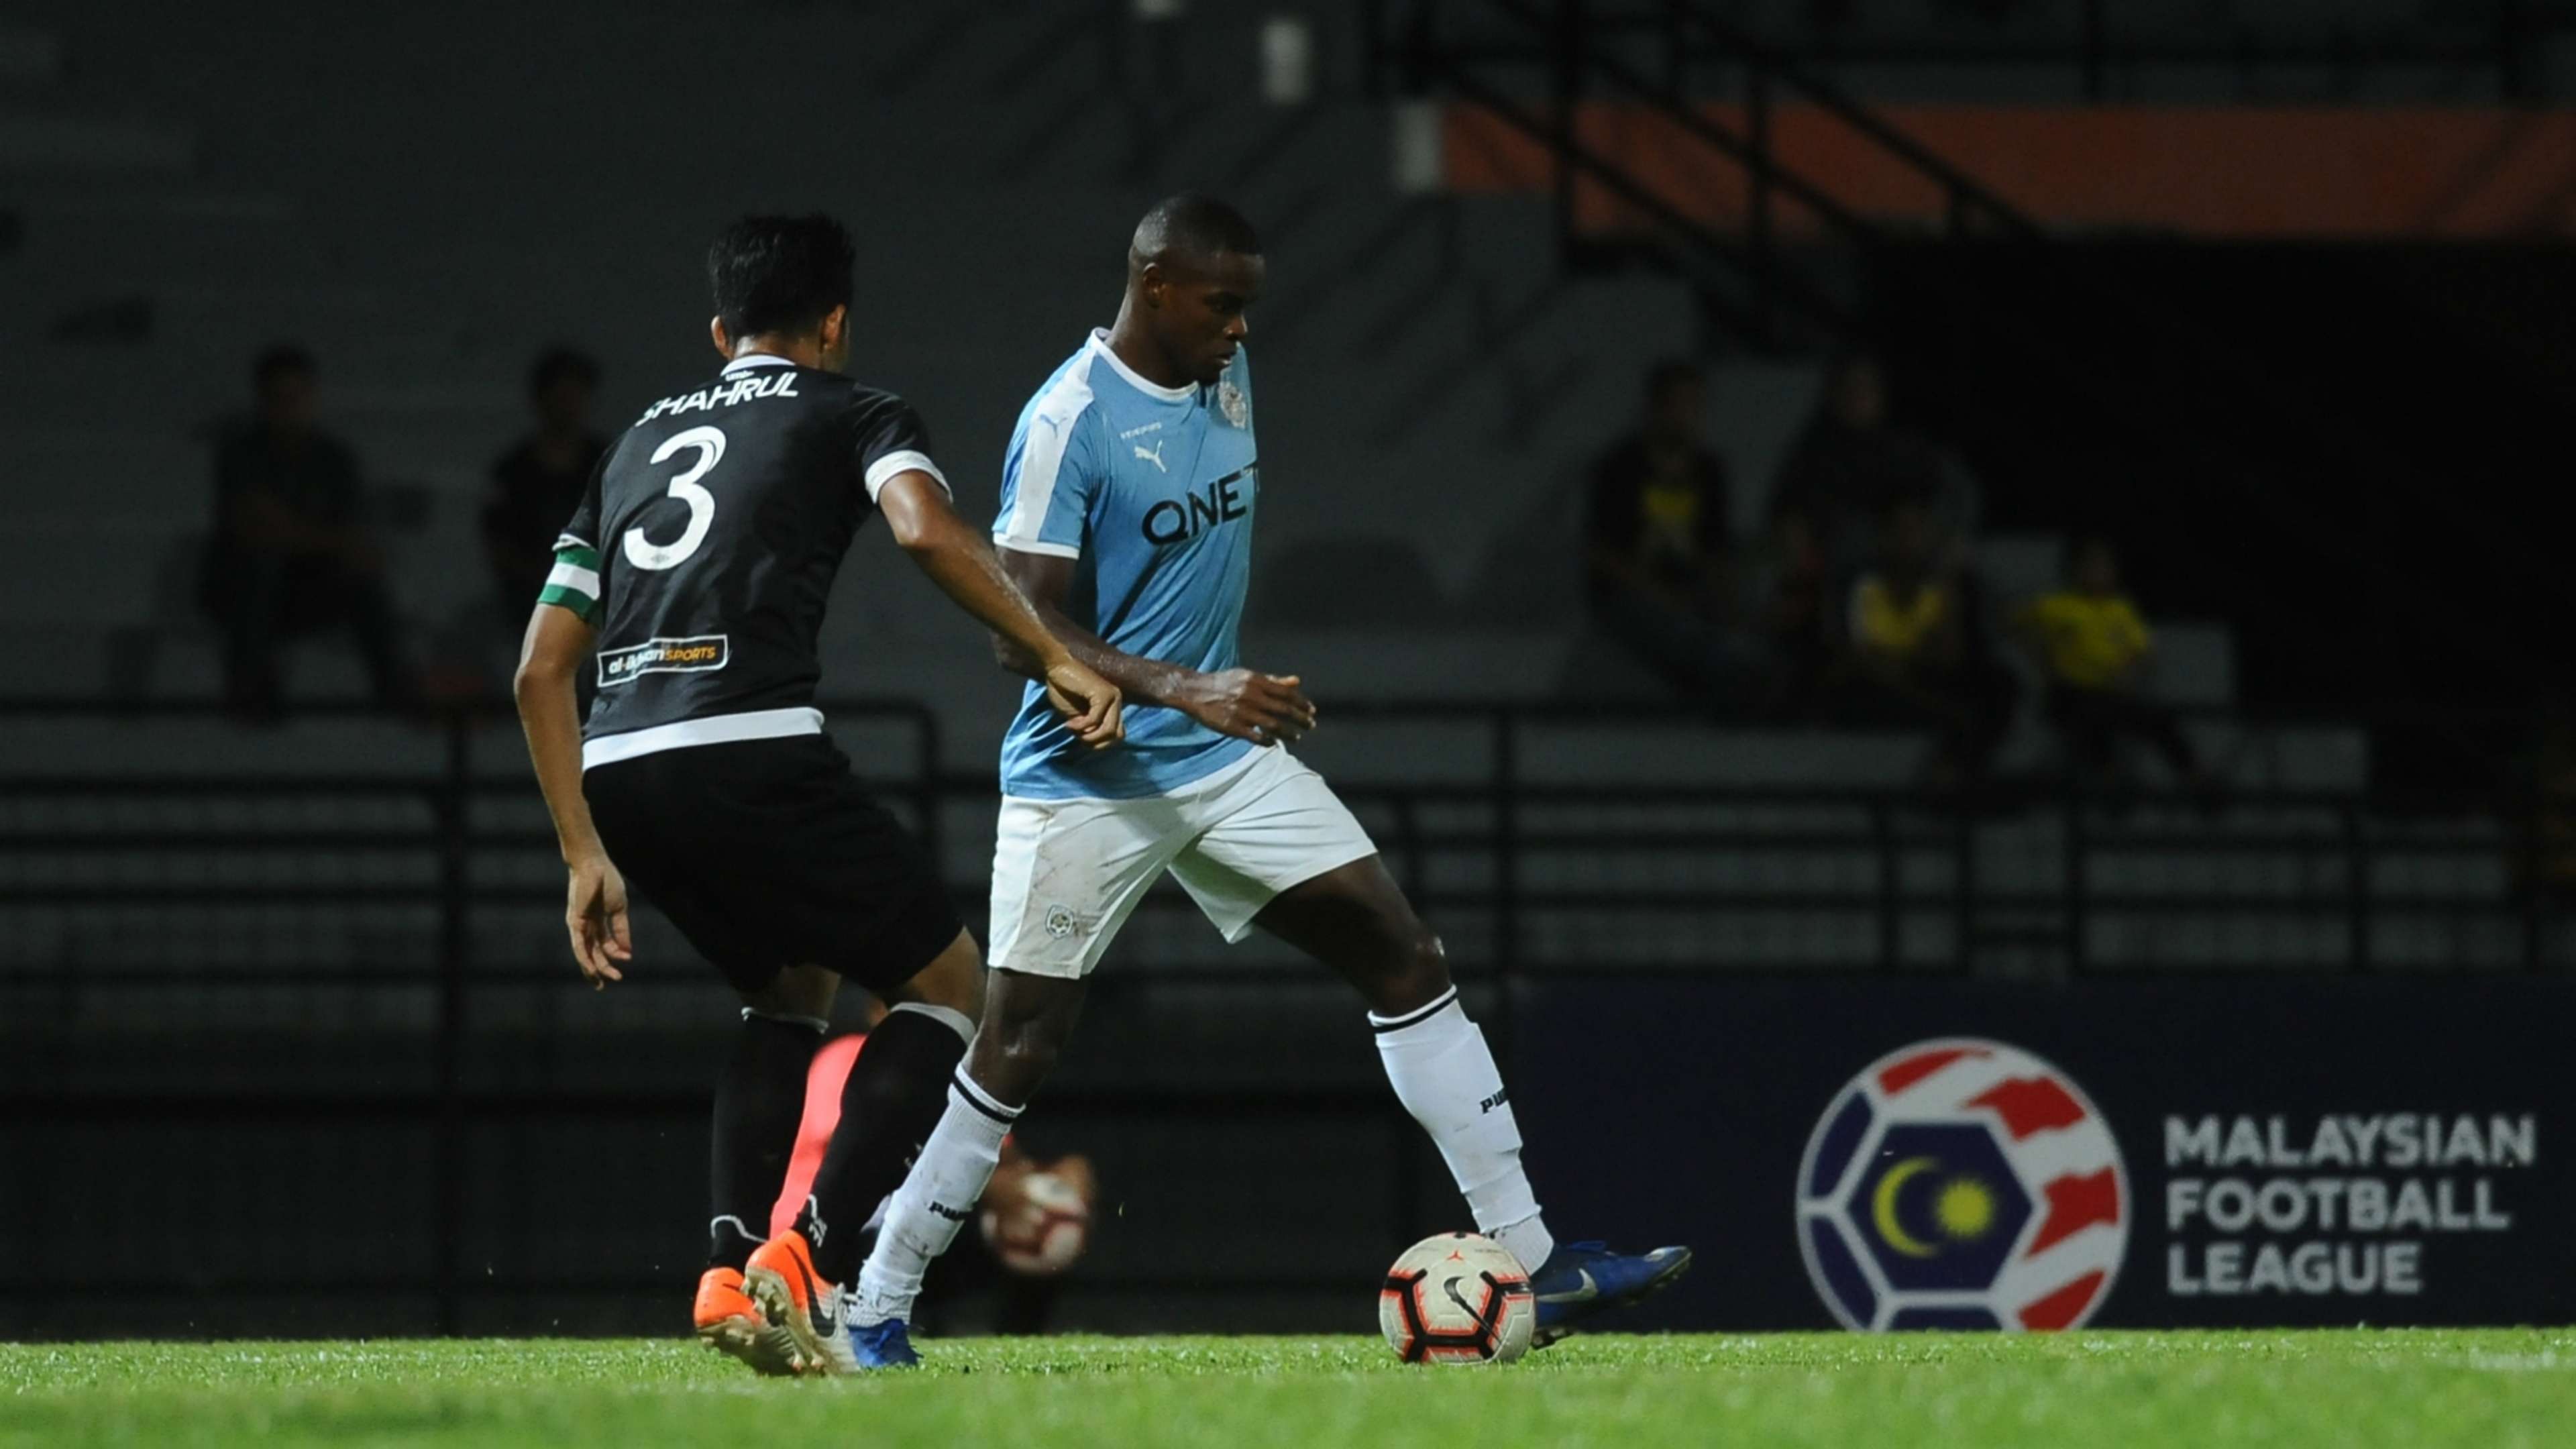 Washingston Brandao, PJ City FC v Perak, Malaysia Super League, 14 Jun 2019